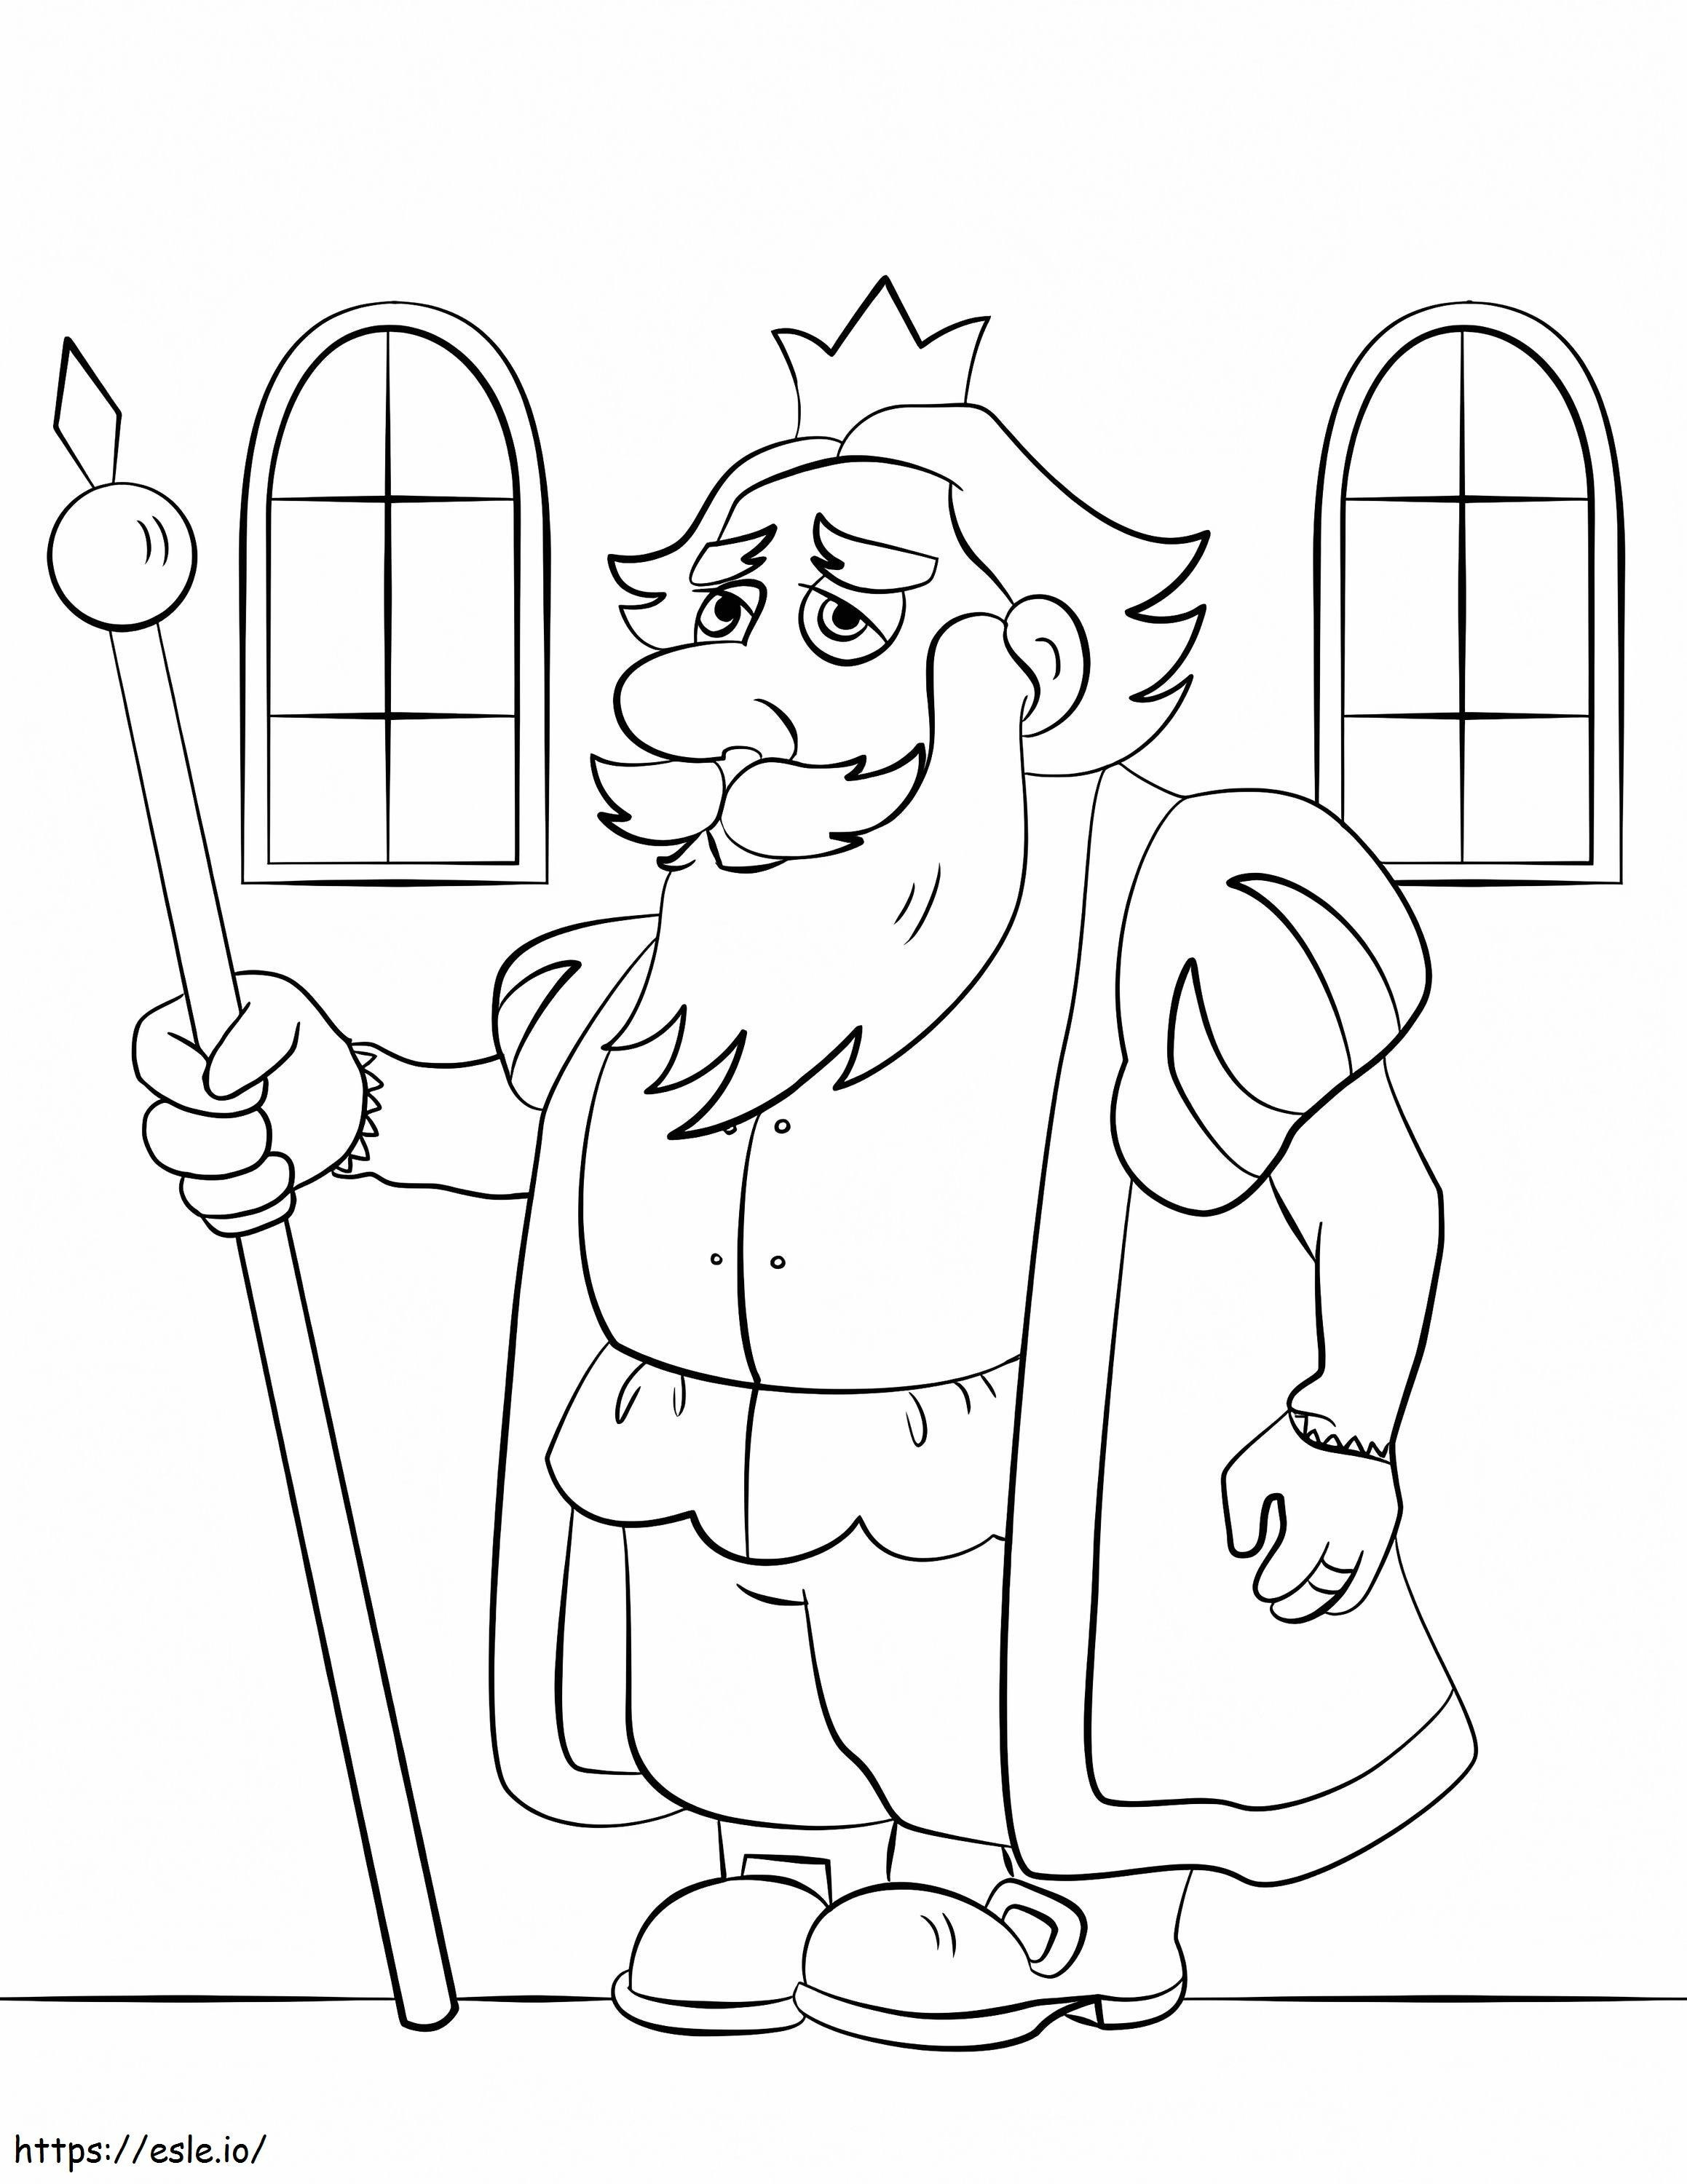 Cartoon King coloring page